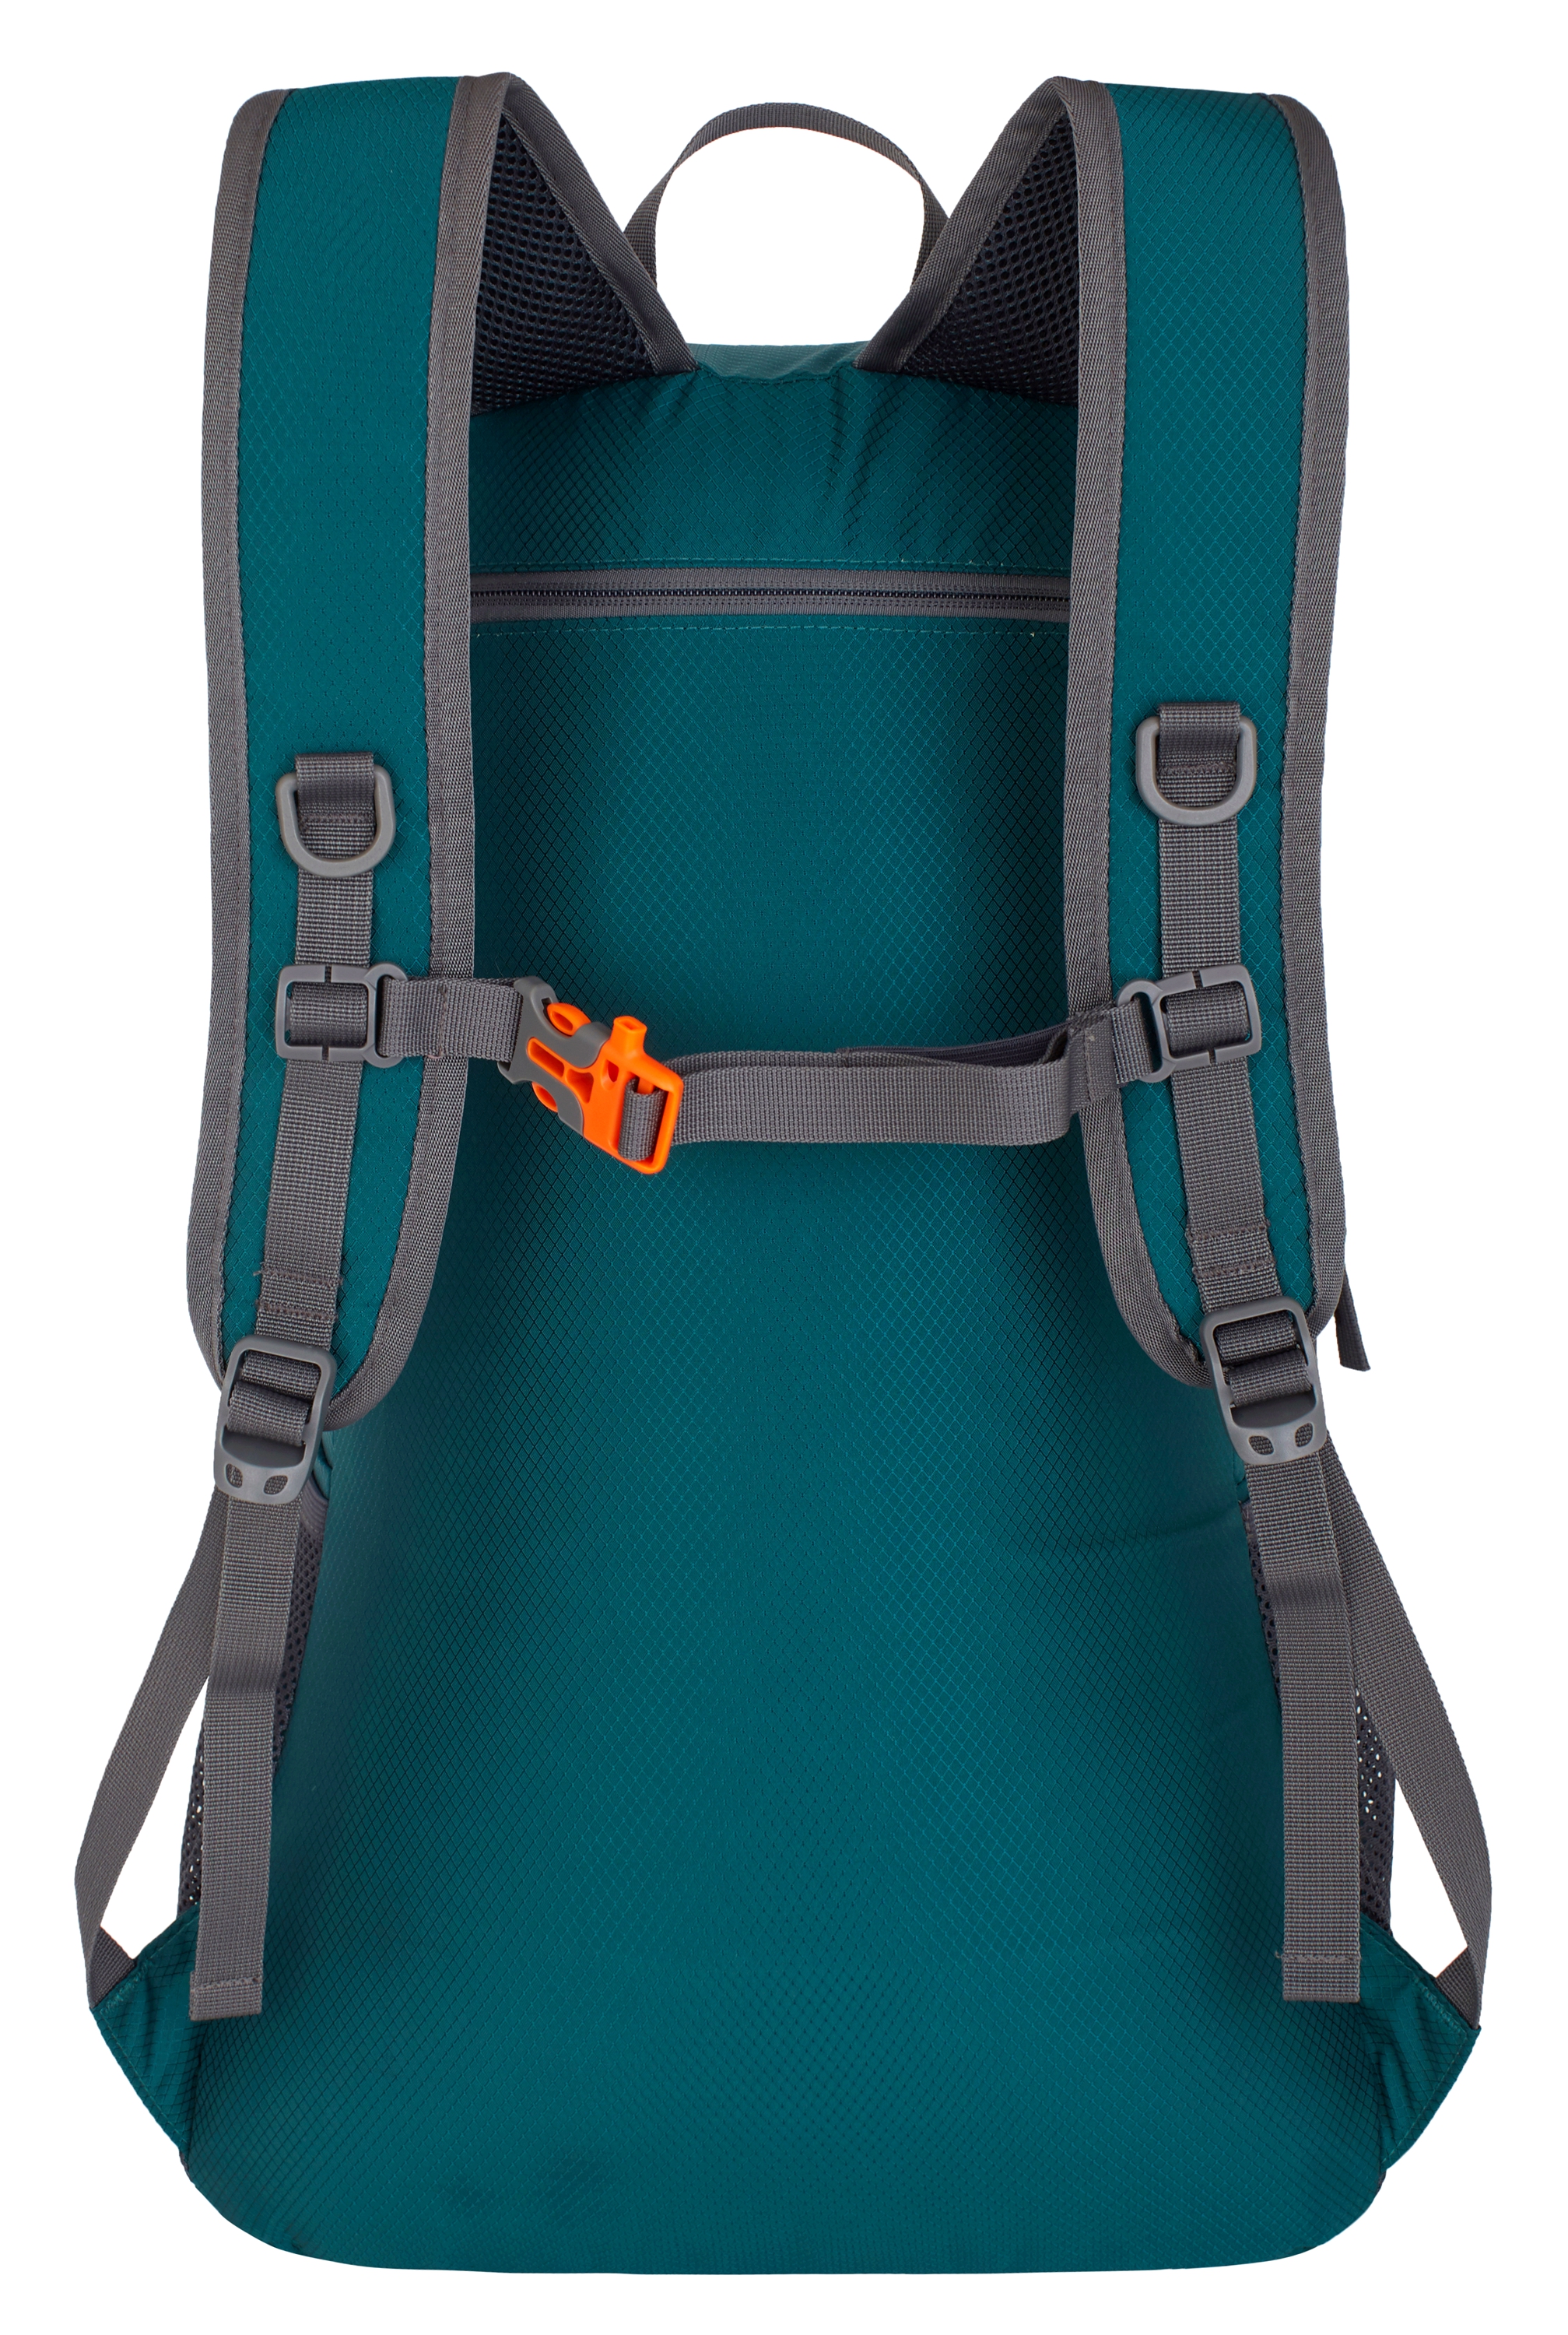 Venture Pal 40L Lightweight Packable Travel Hiking Backpack - image 5 of 7